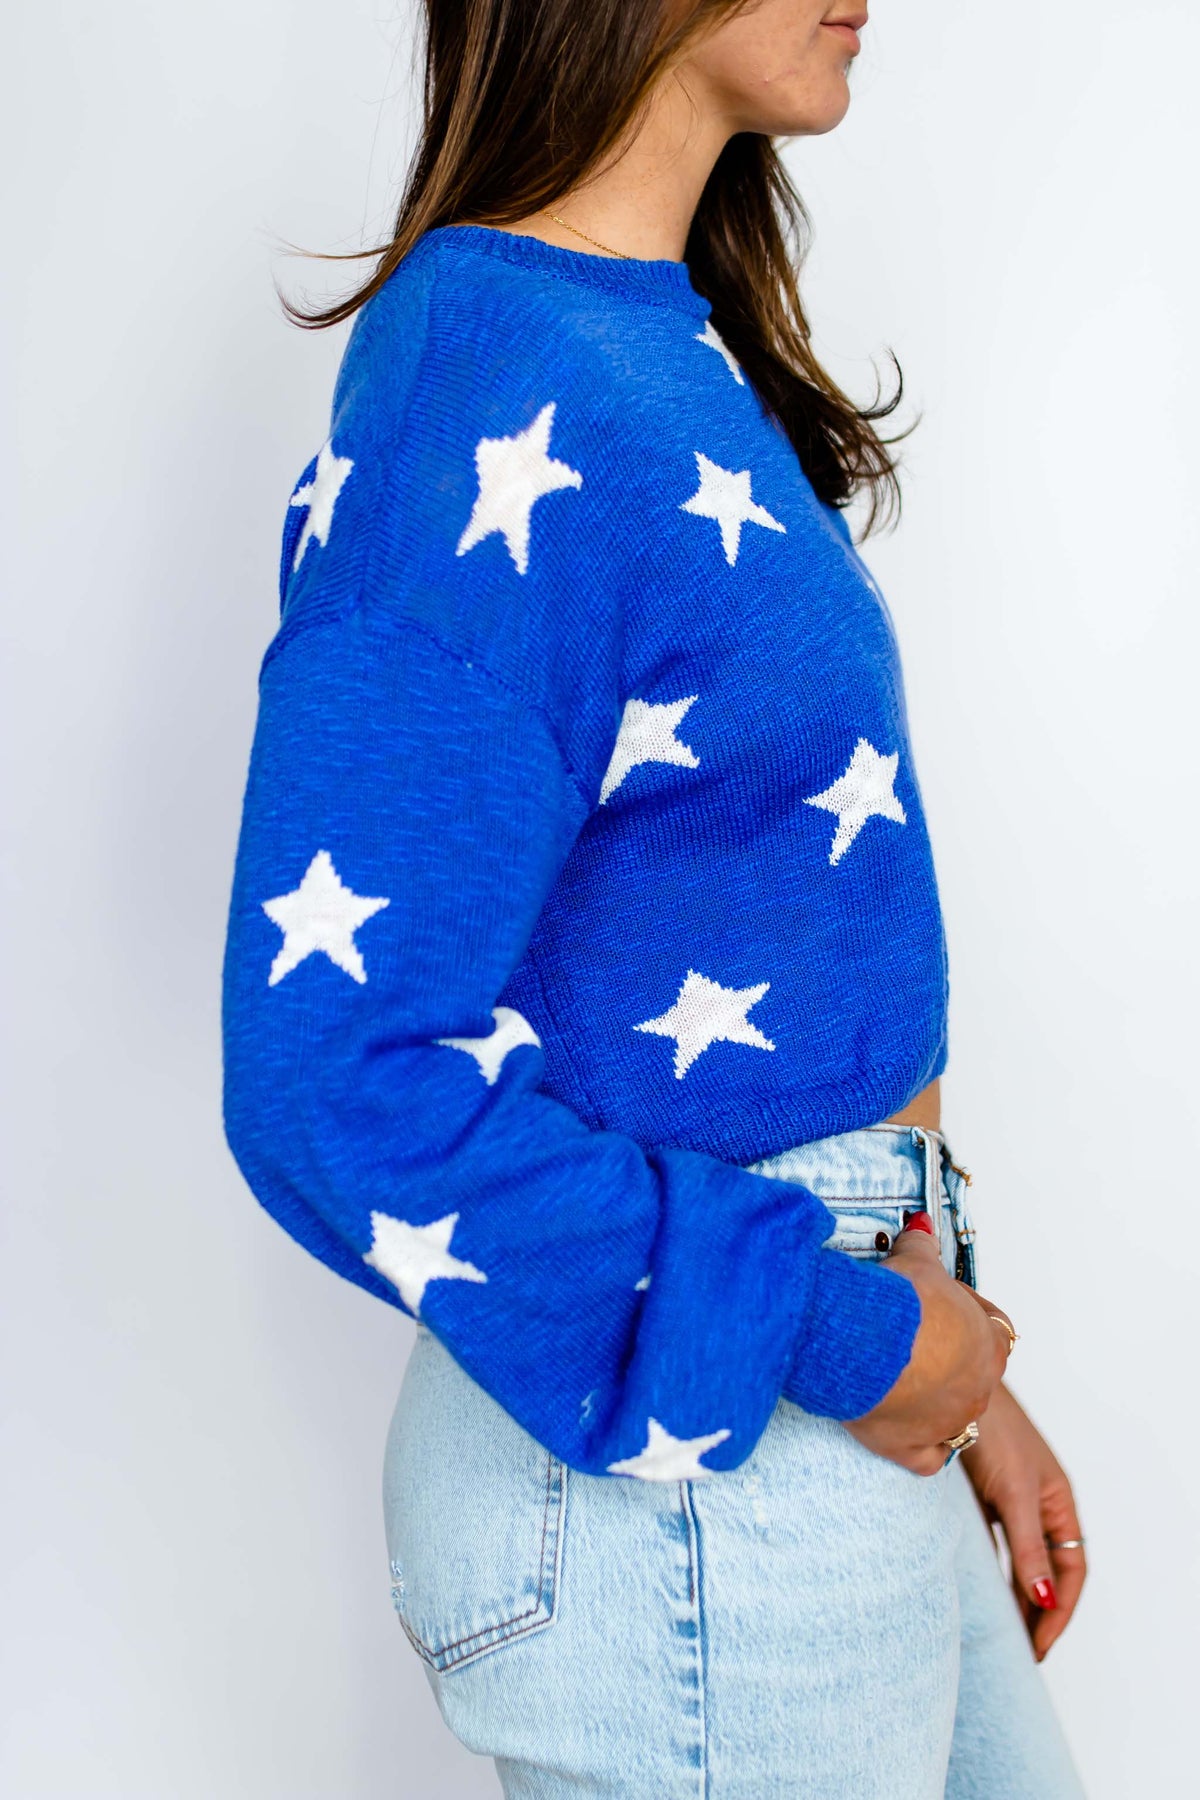 Ava Sweater in Star Spangled (L)